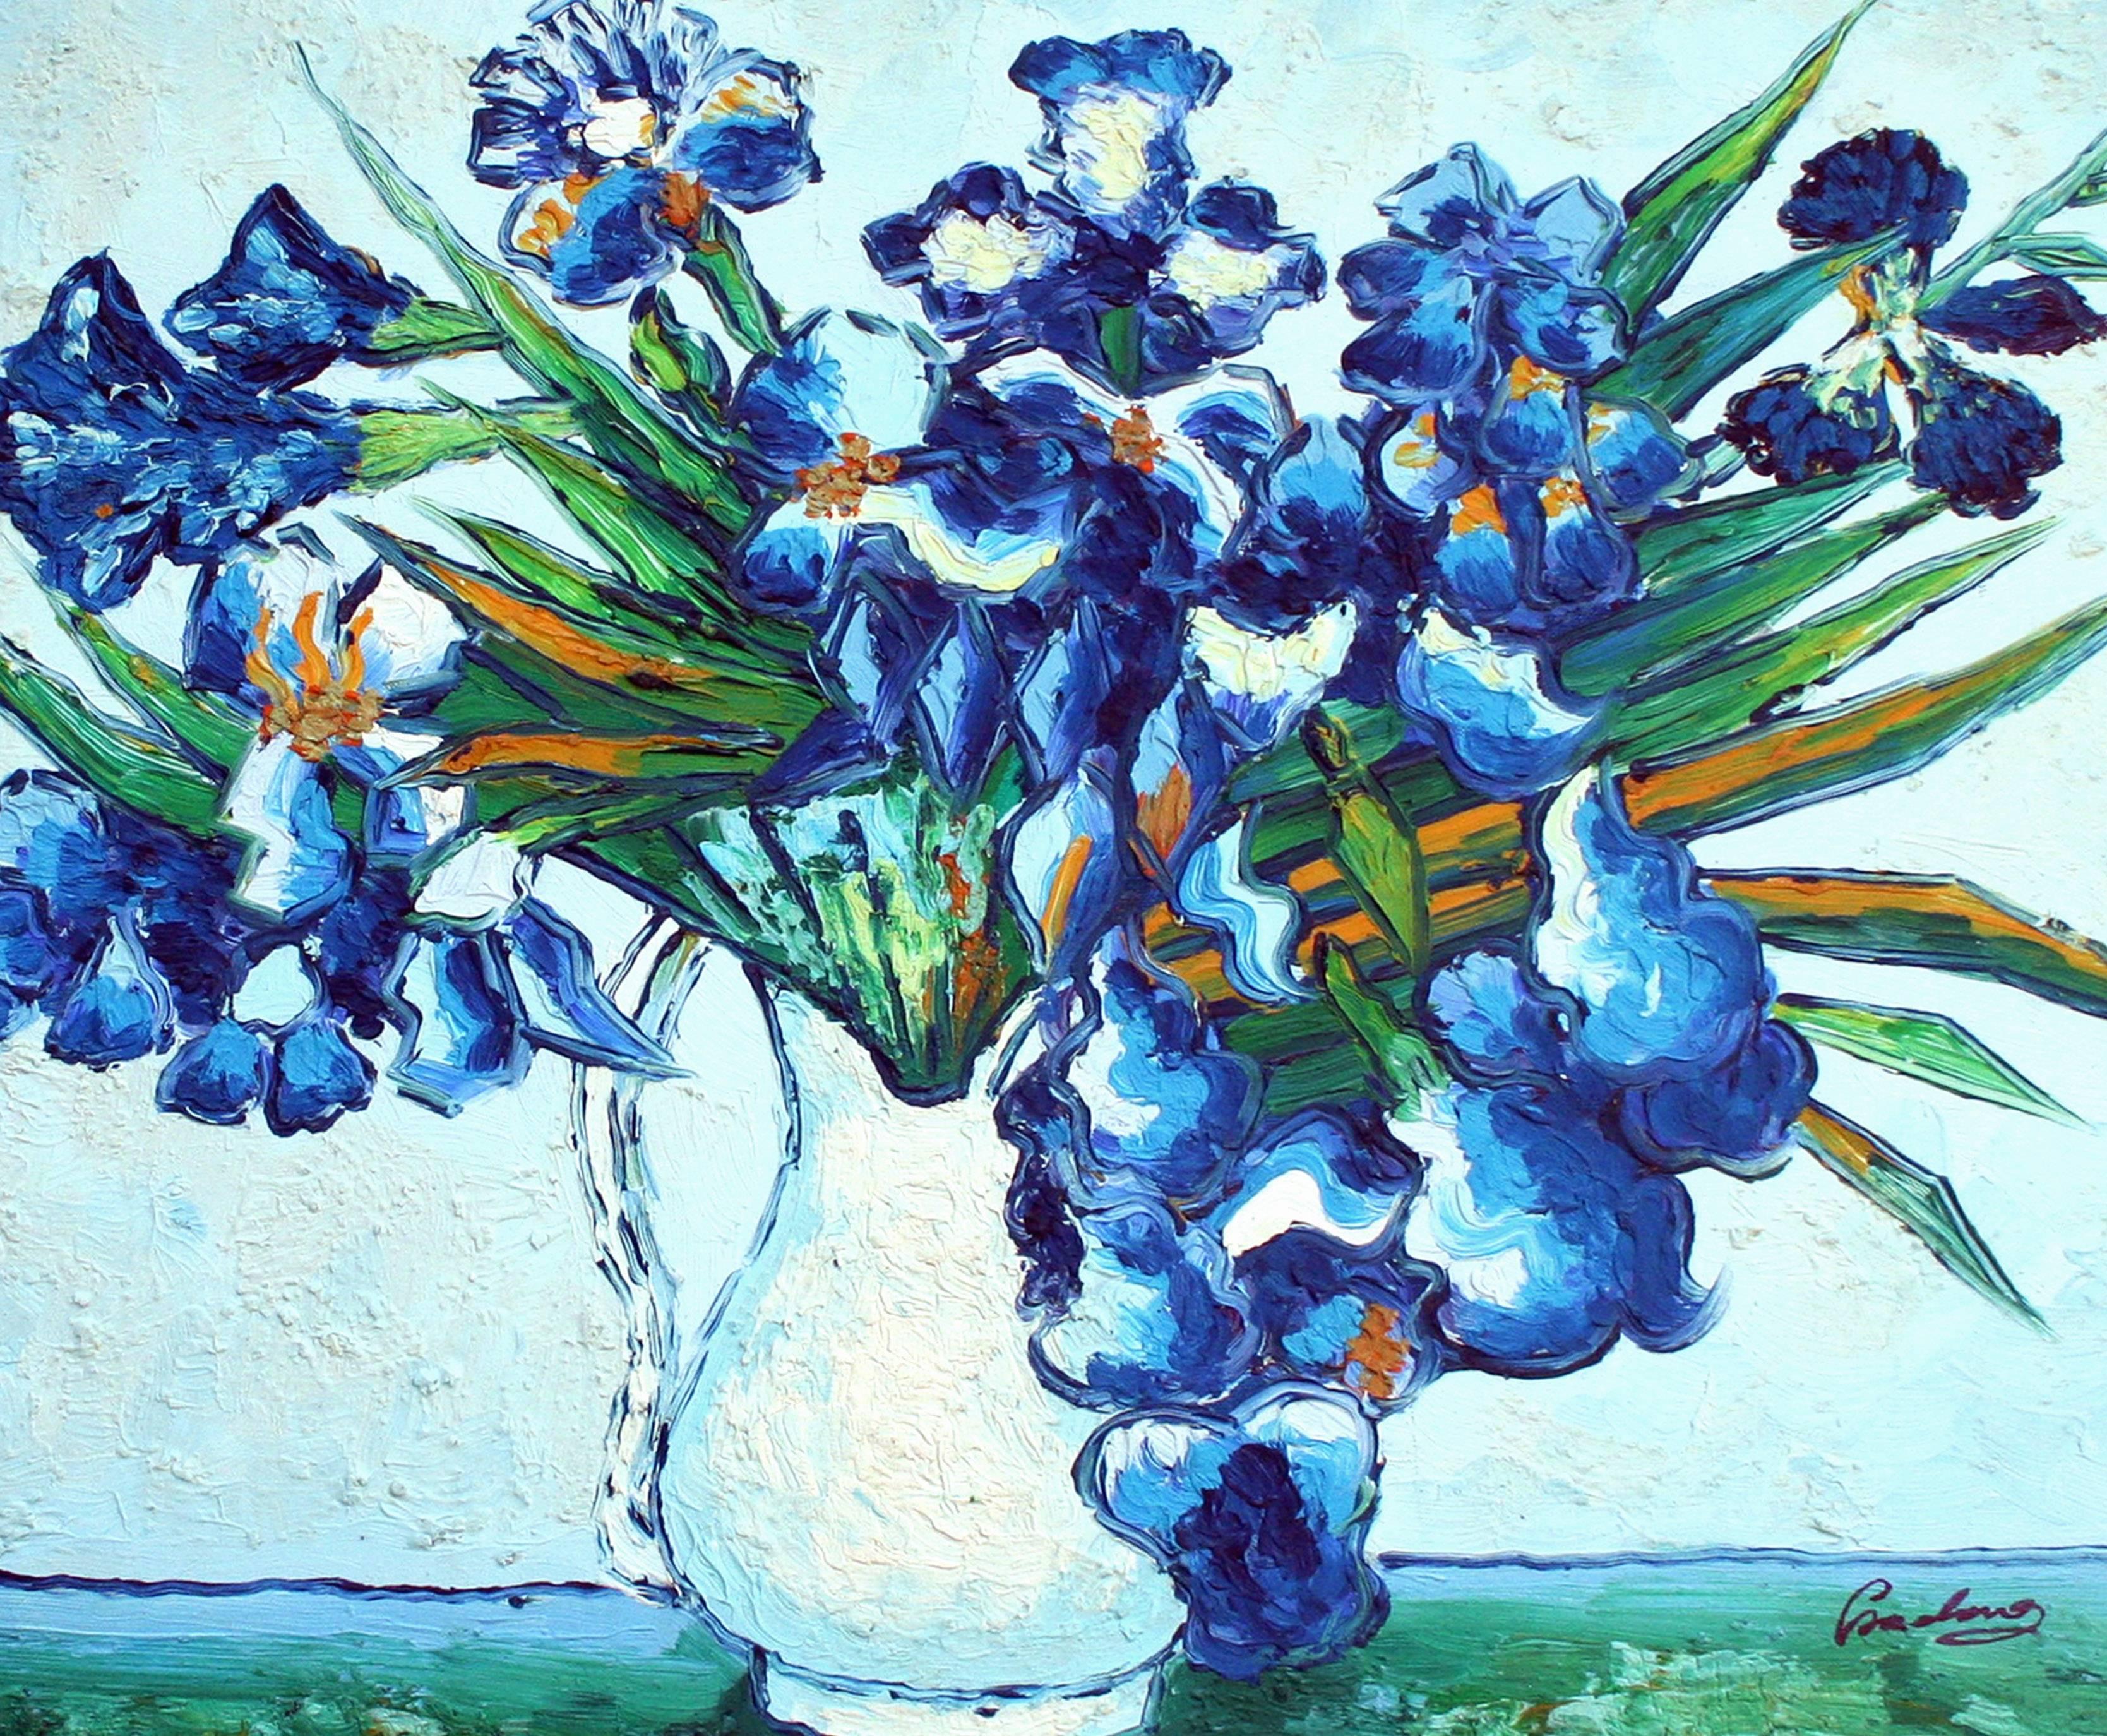 blue iris van gogh